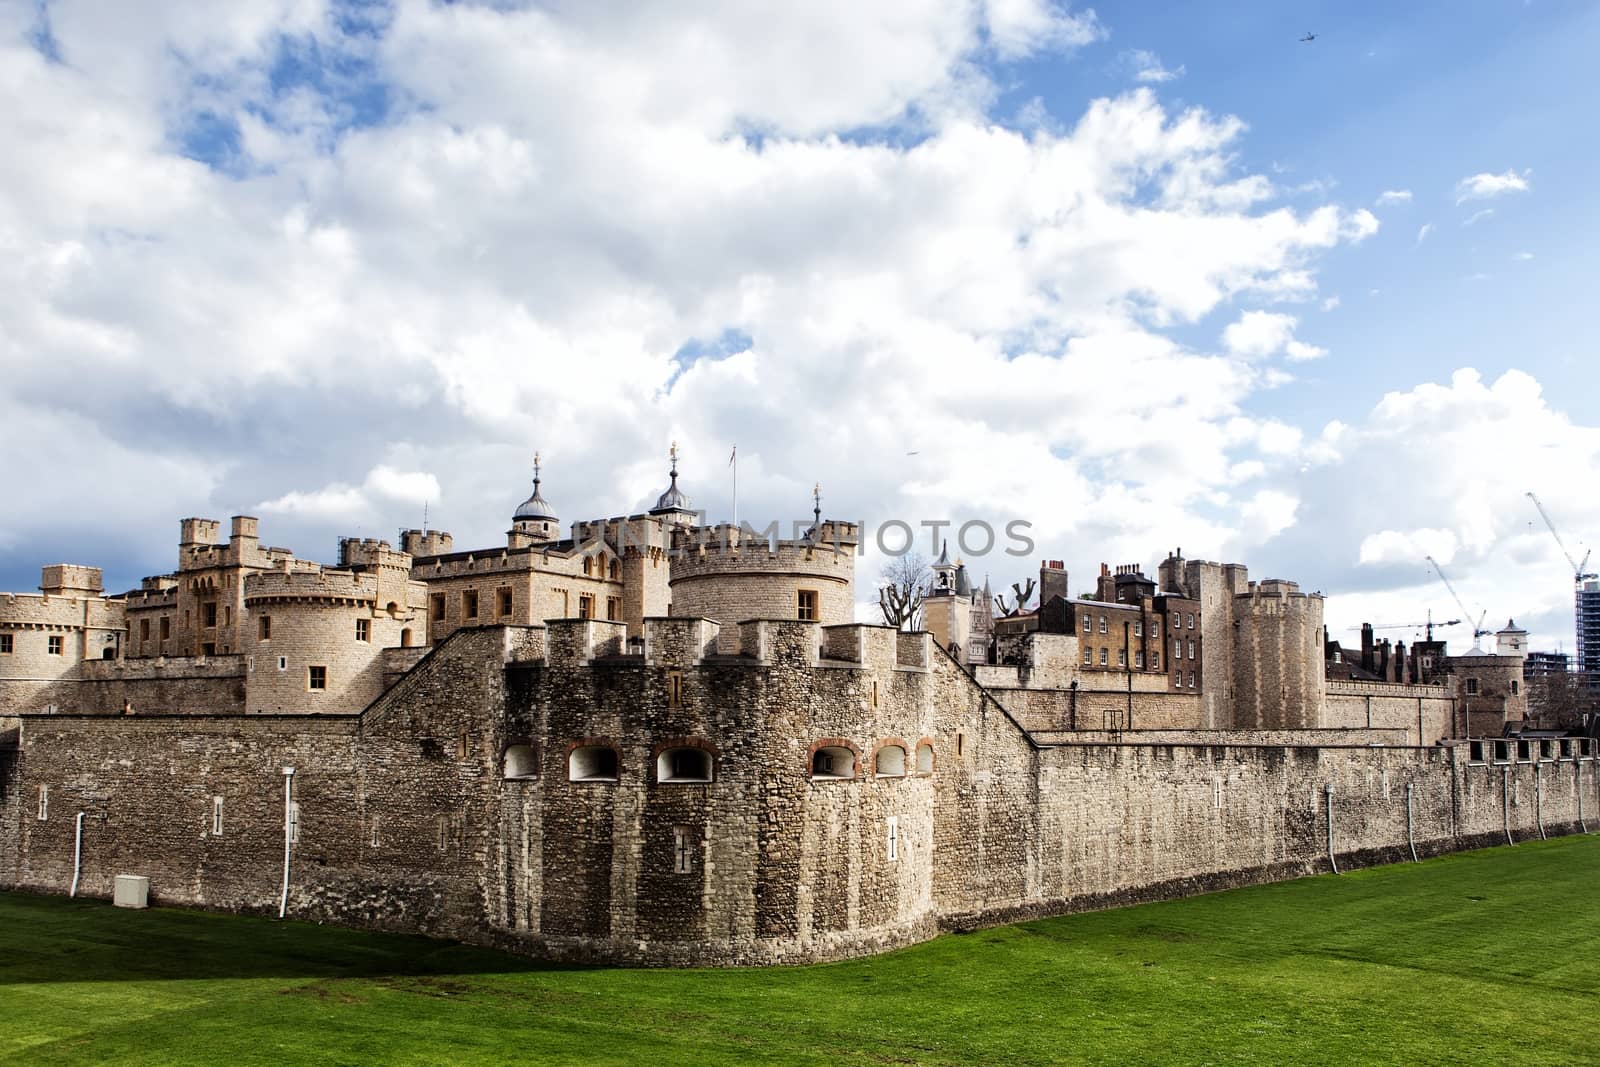 Tower of London, United Kingdom by mitakag